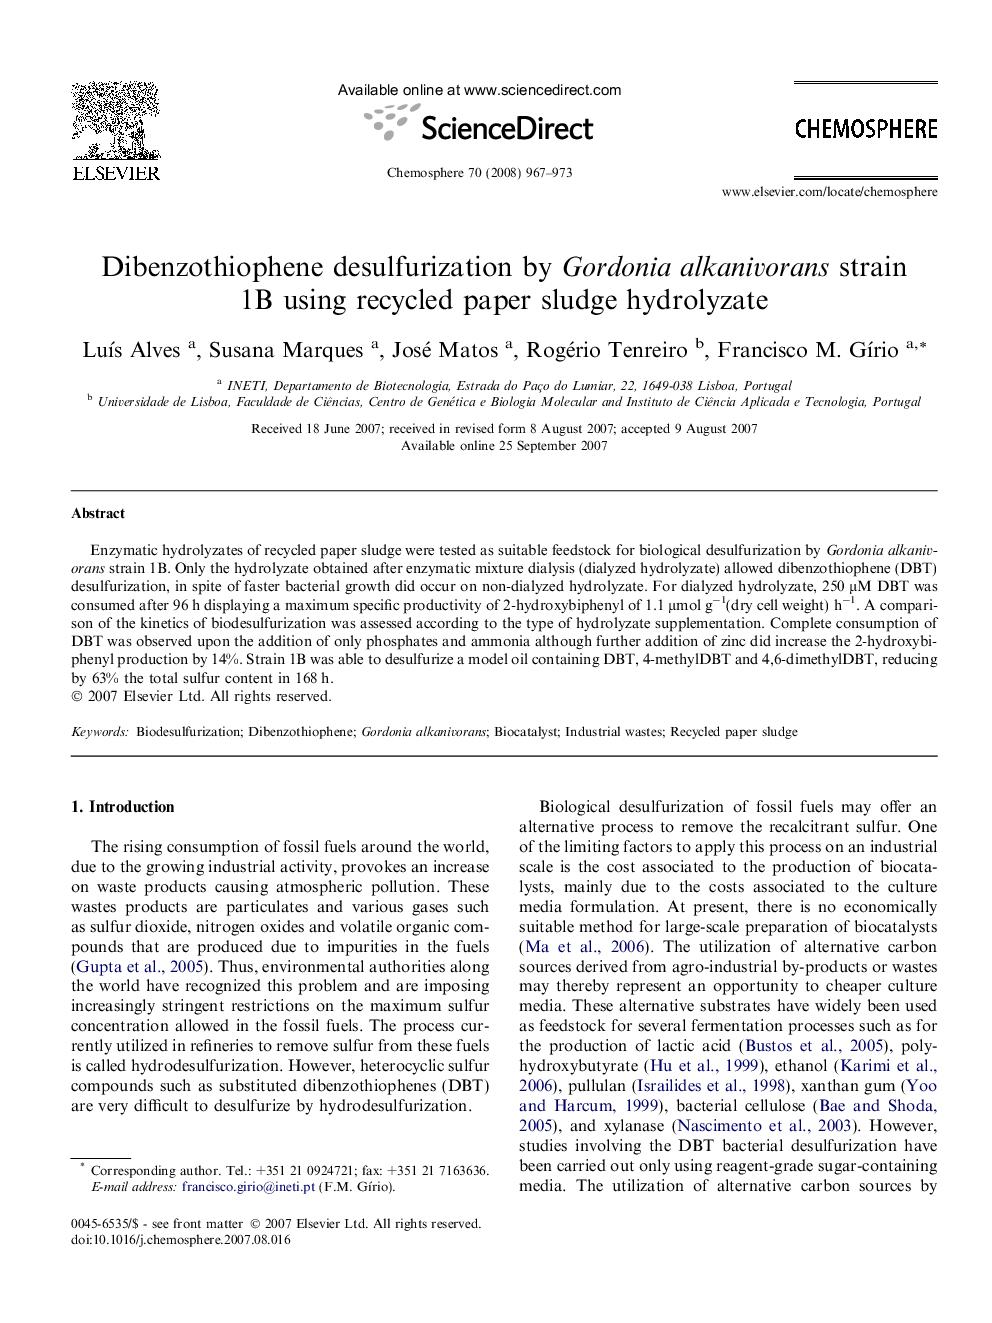 Dibenzothiophene desulfurization by Gordonia alkanivorans strain 1B using recycled paper sludge hydrolyzate